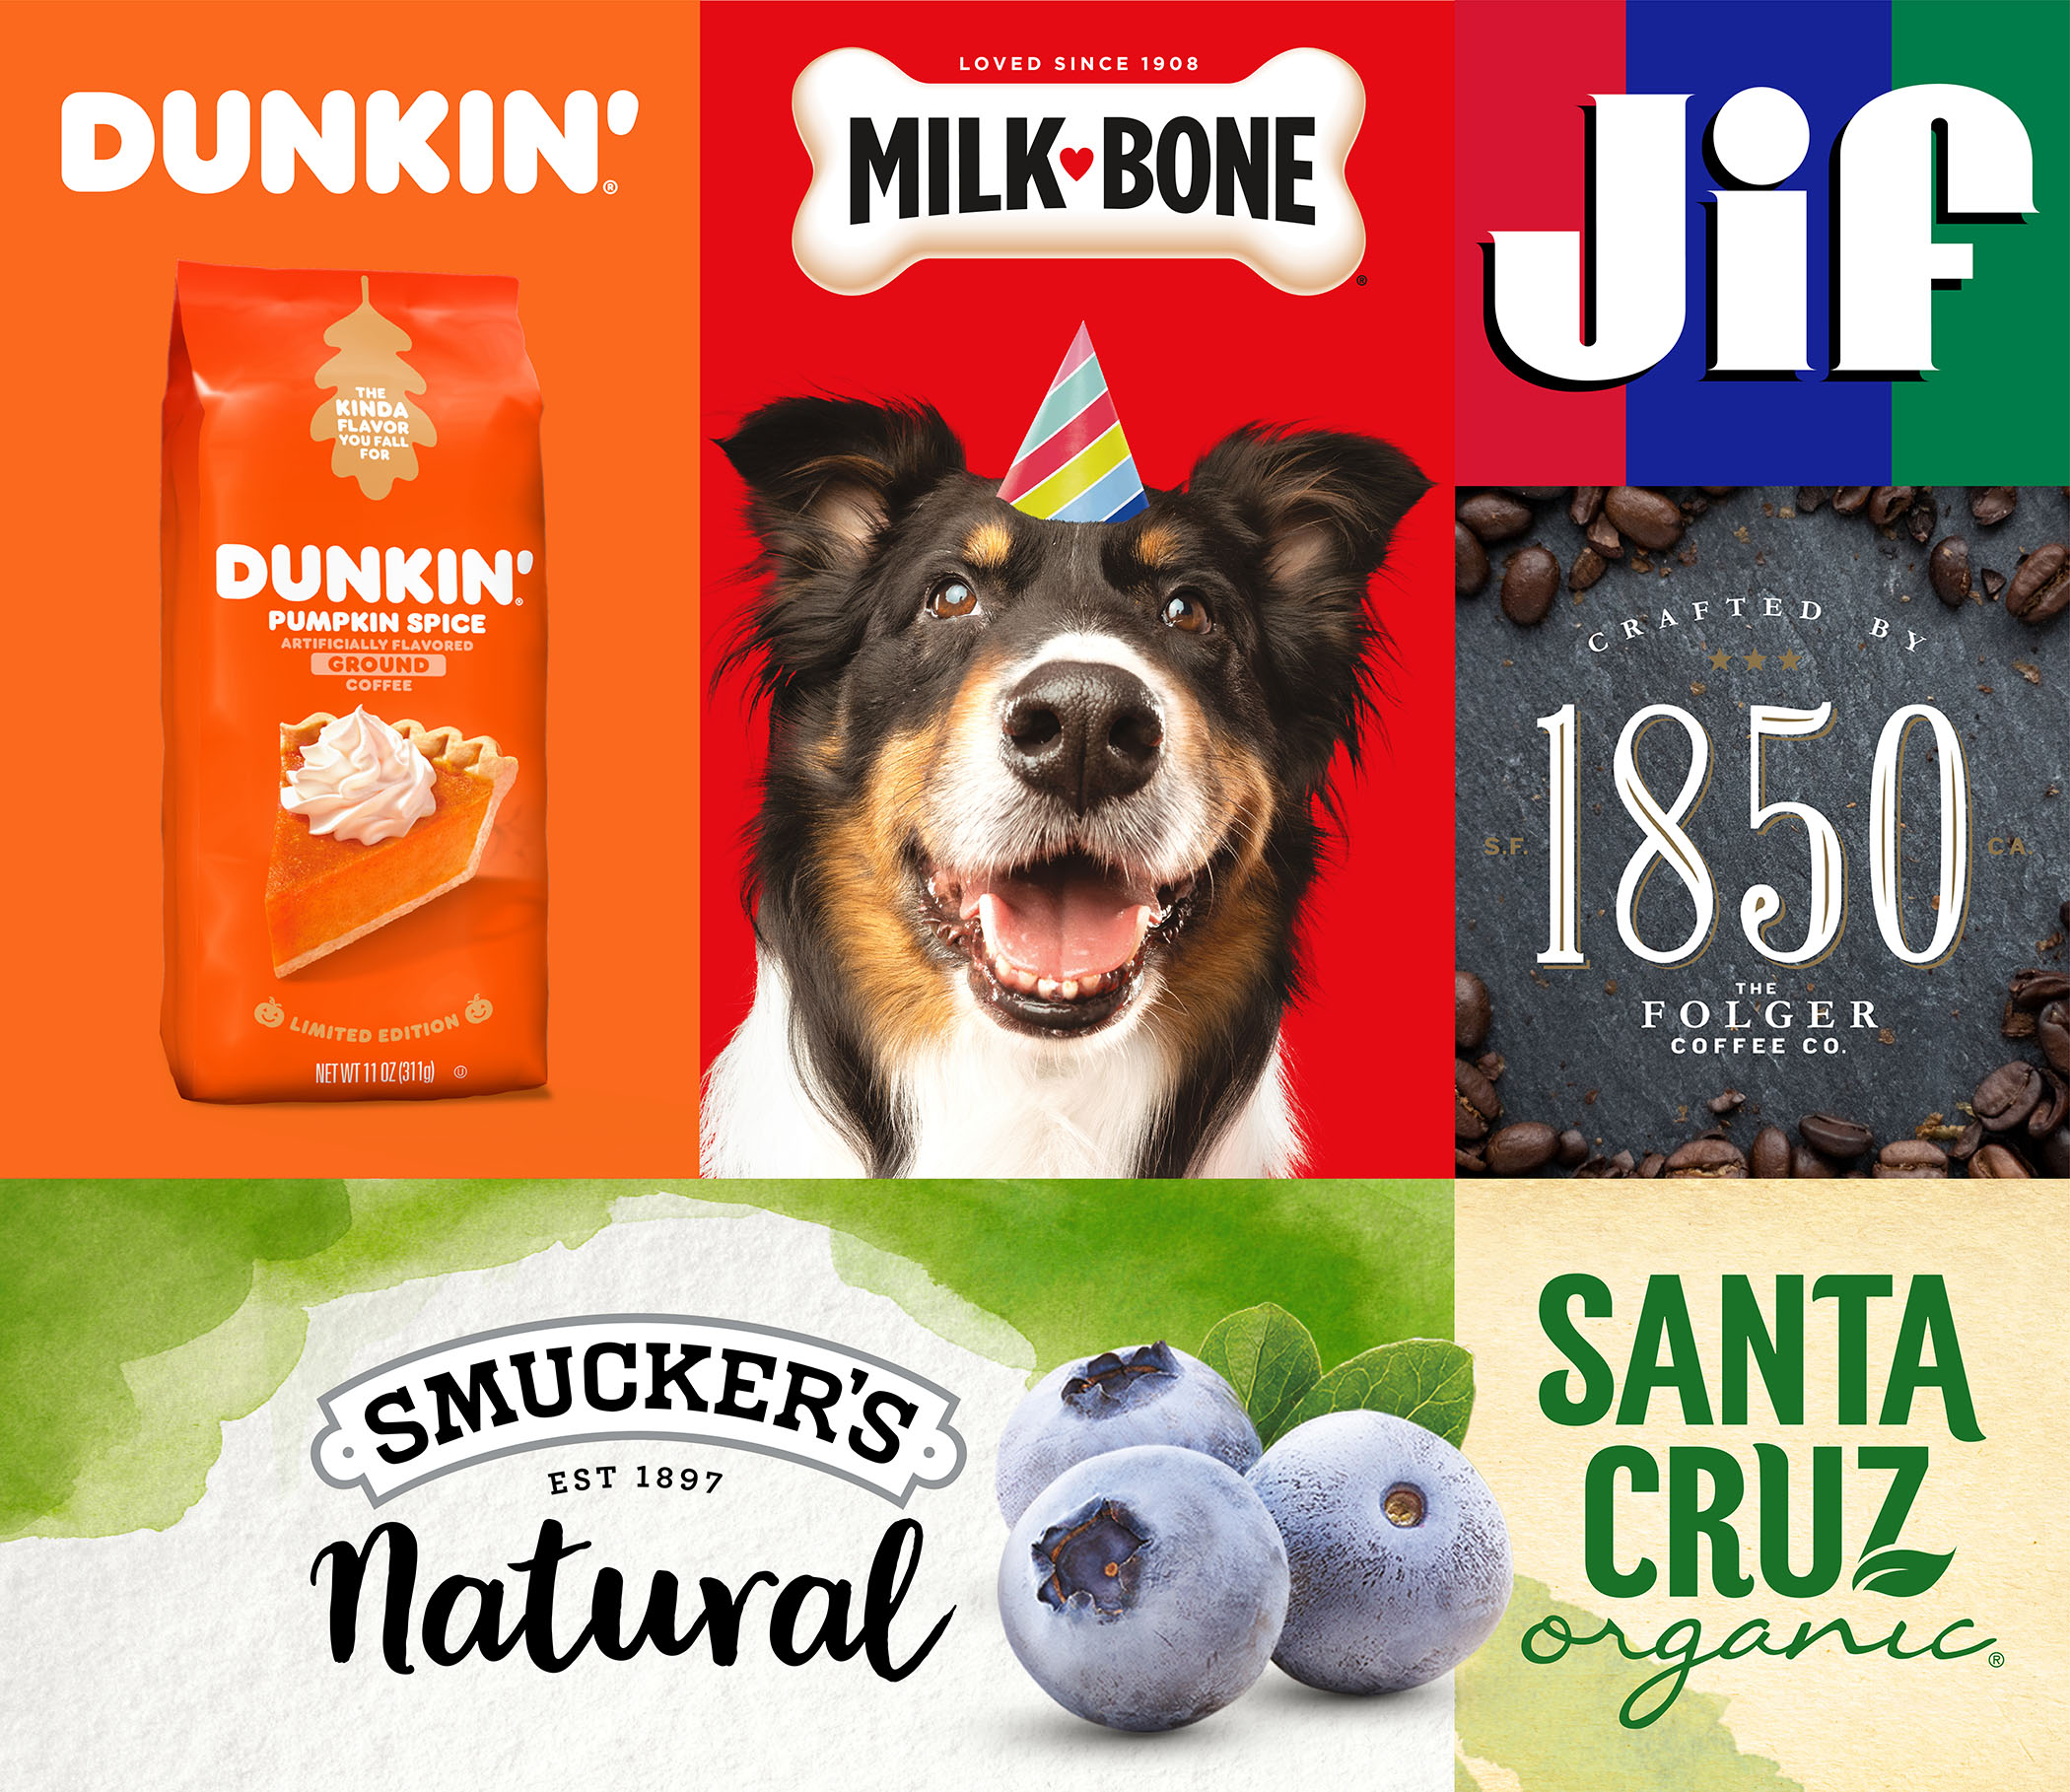 Dunkin', Folgers 1850, Jif, Santa Cruz, True Roots, and Milk Bone logos